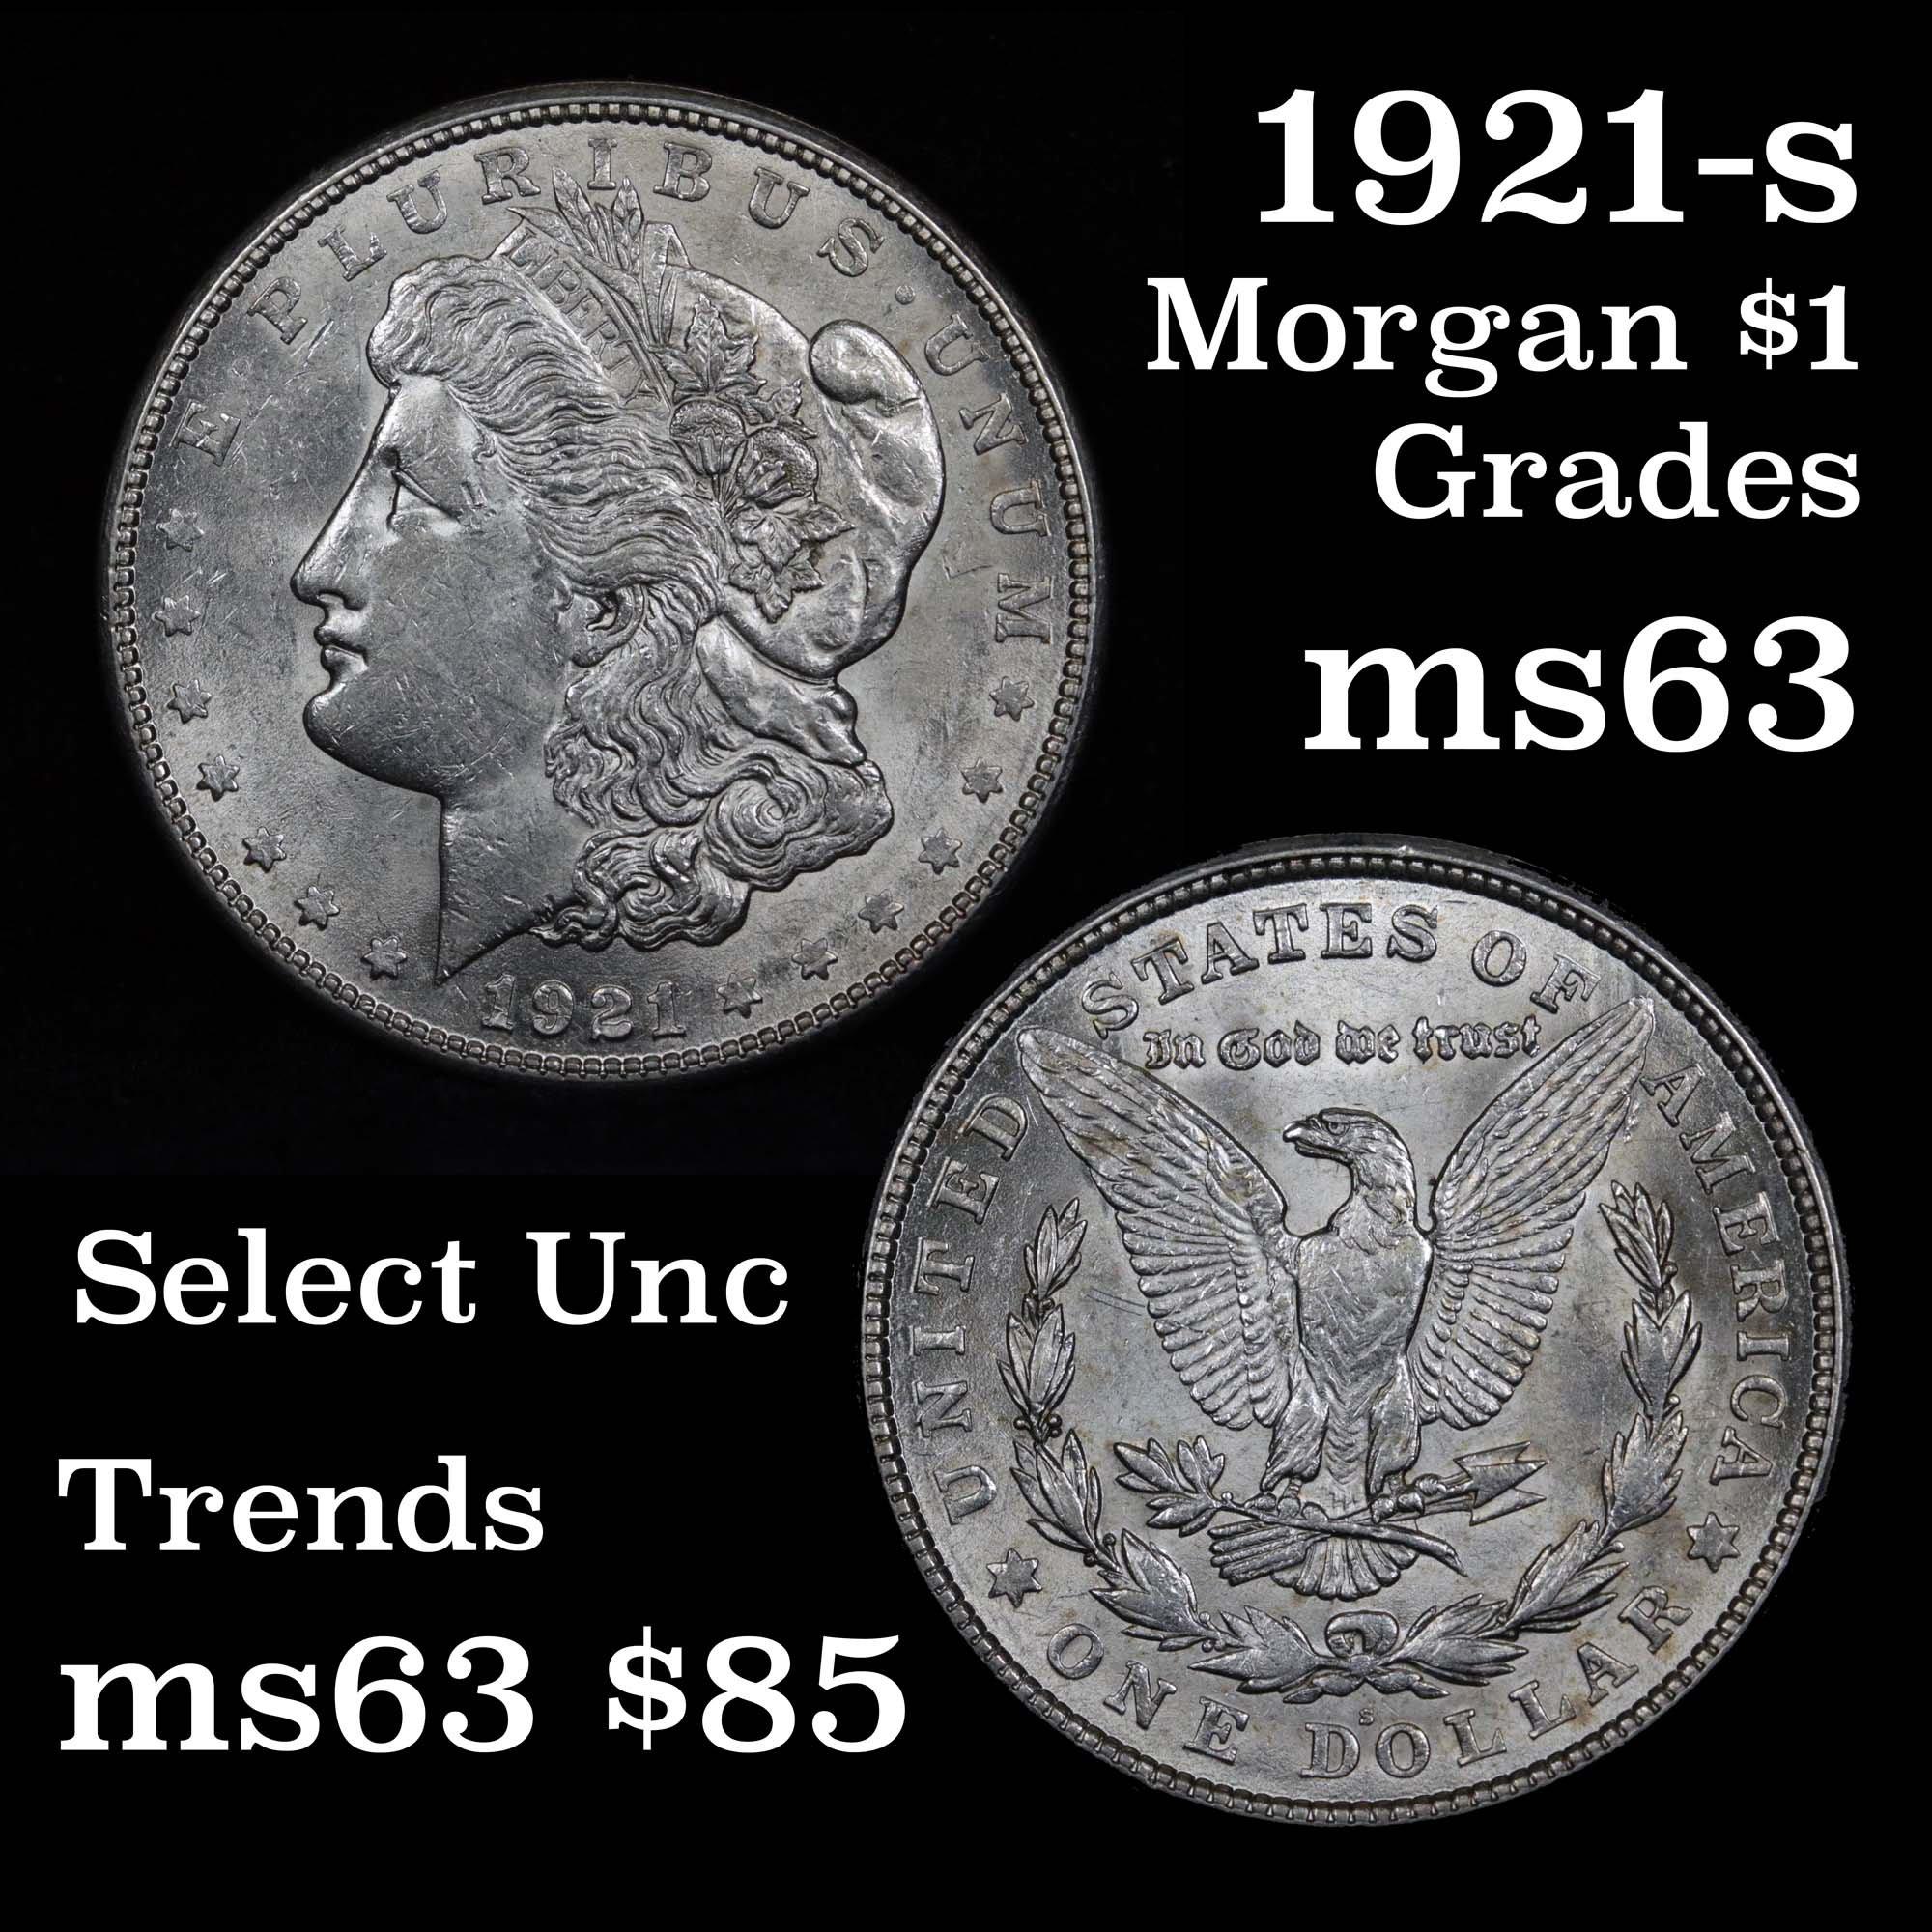 Blast white 1921-s Morgan Dollar $1 good eye appeal Grades Select Unc